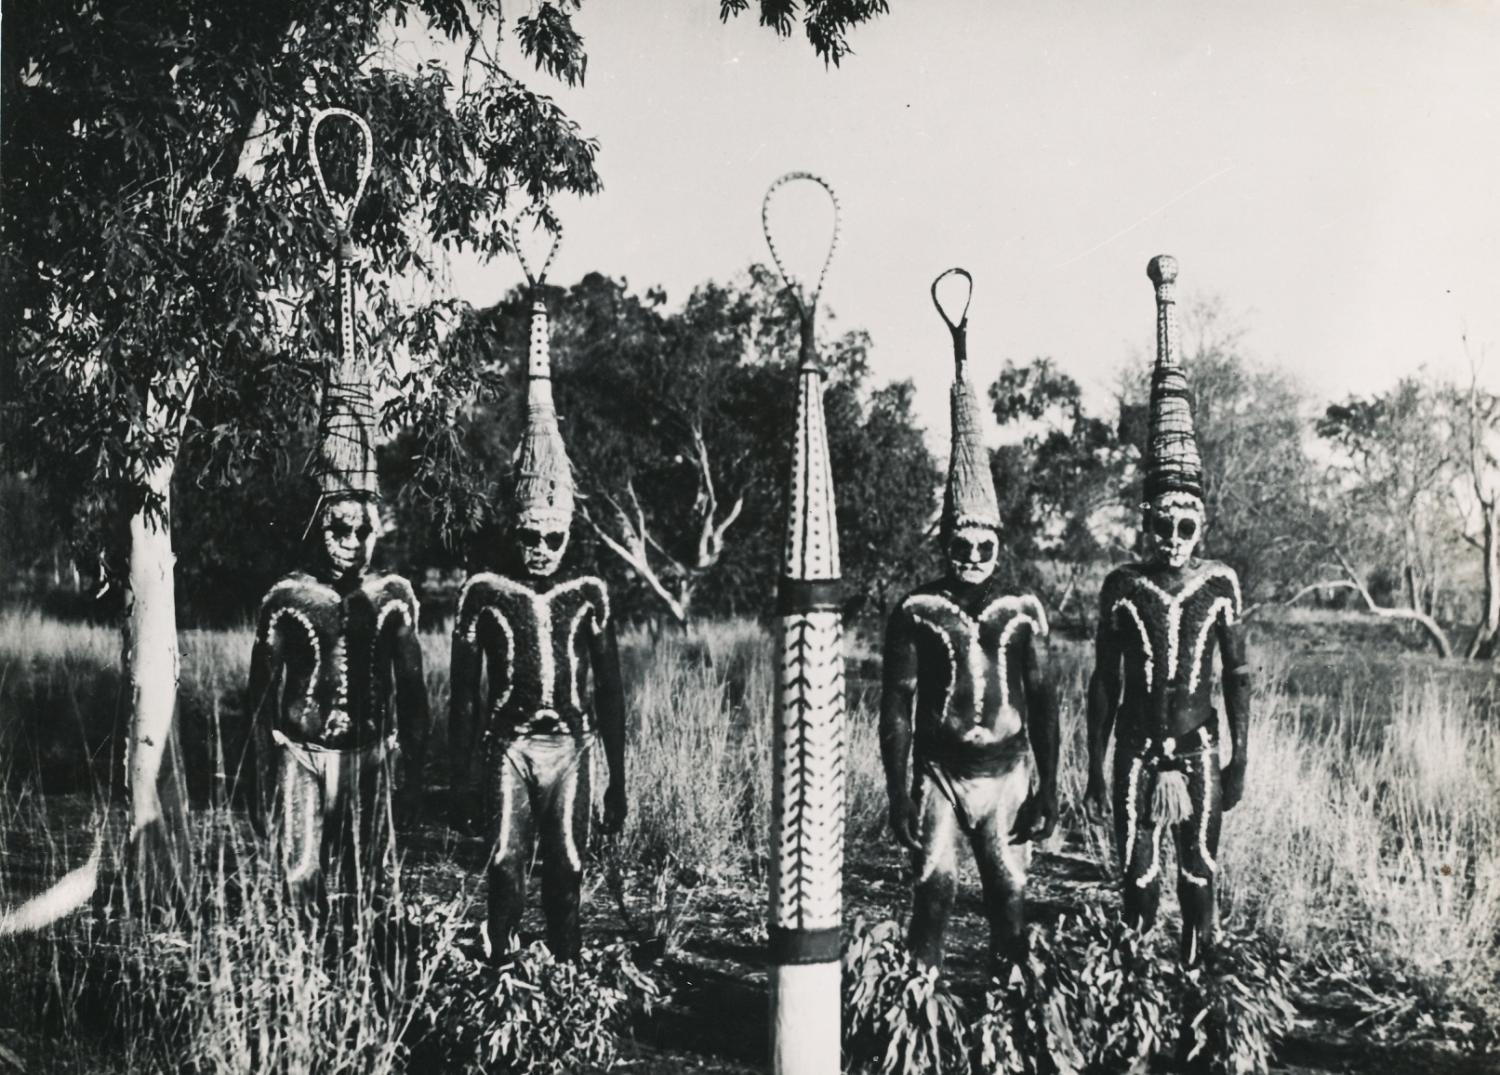 Aboriginal in Corroboree dress. Australia